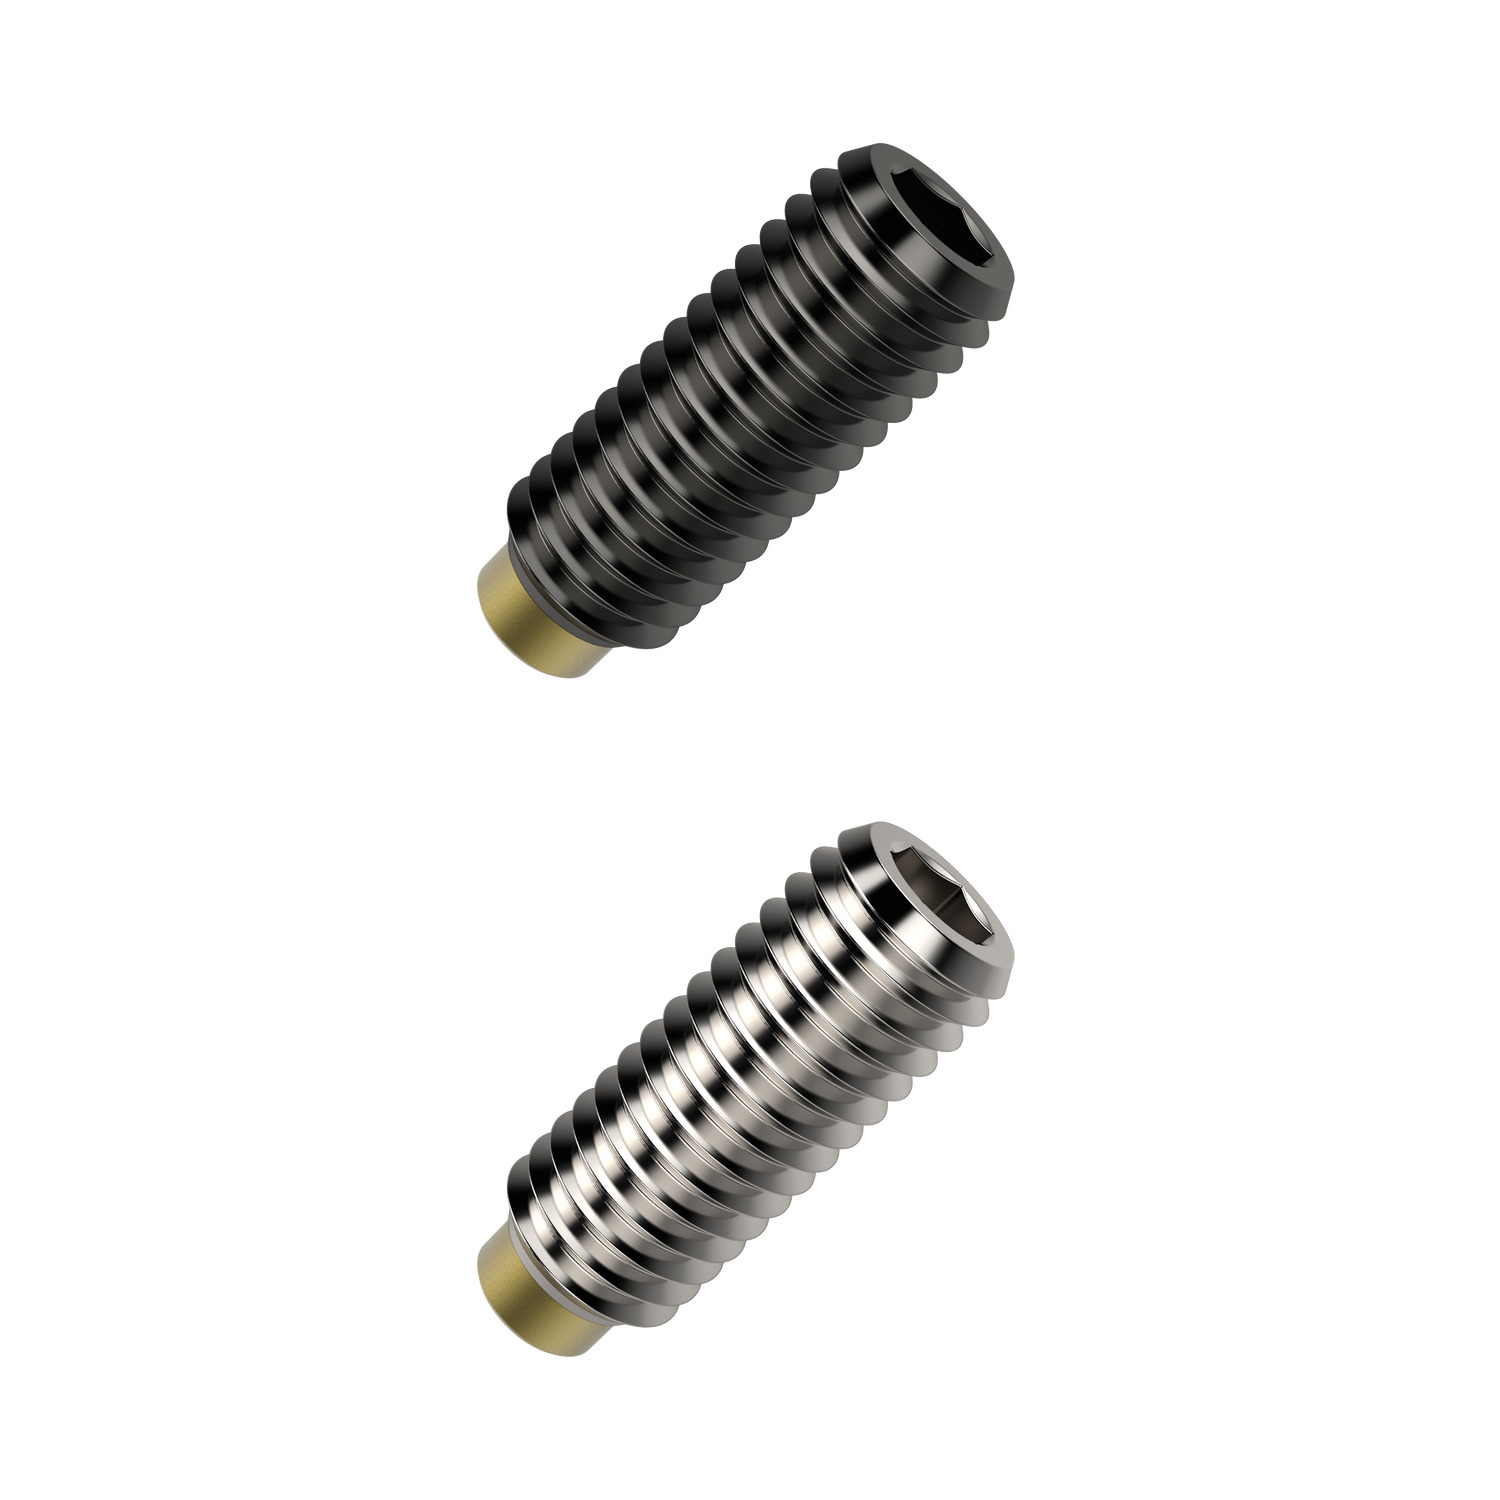 Product 34140.2, Thrust Screws - Brass Pad stainless steel / 